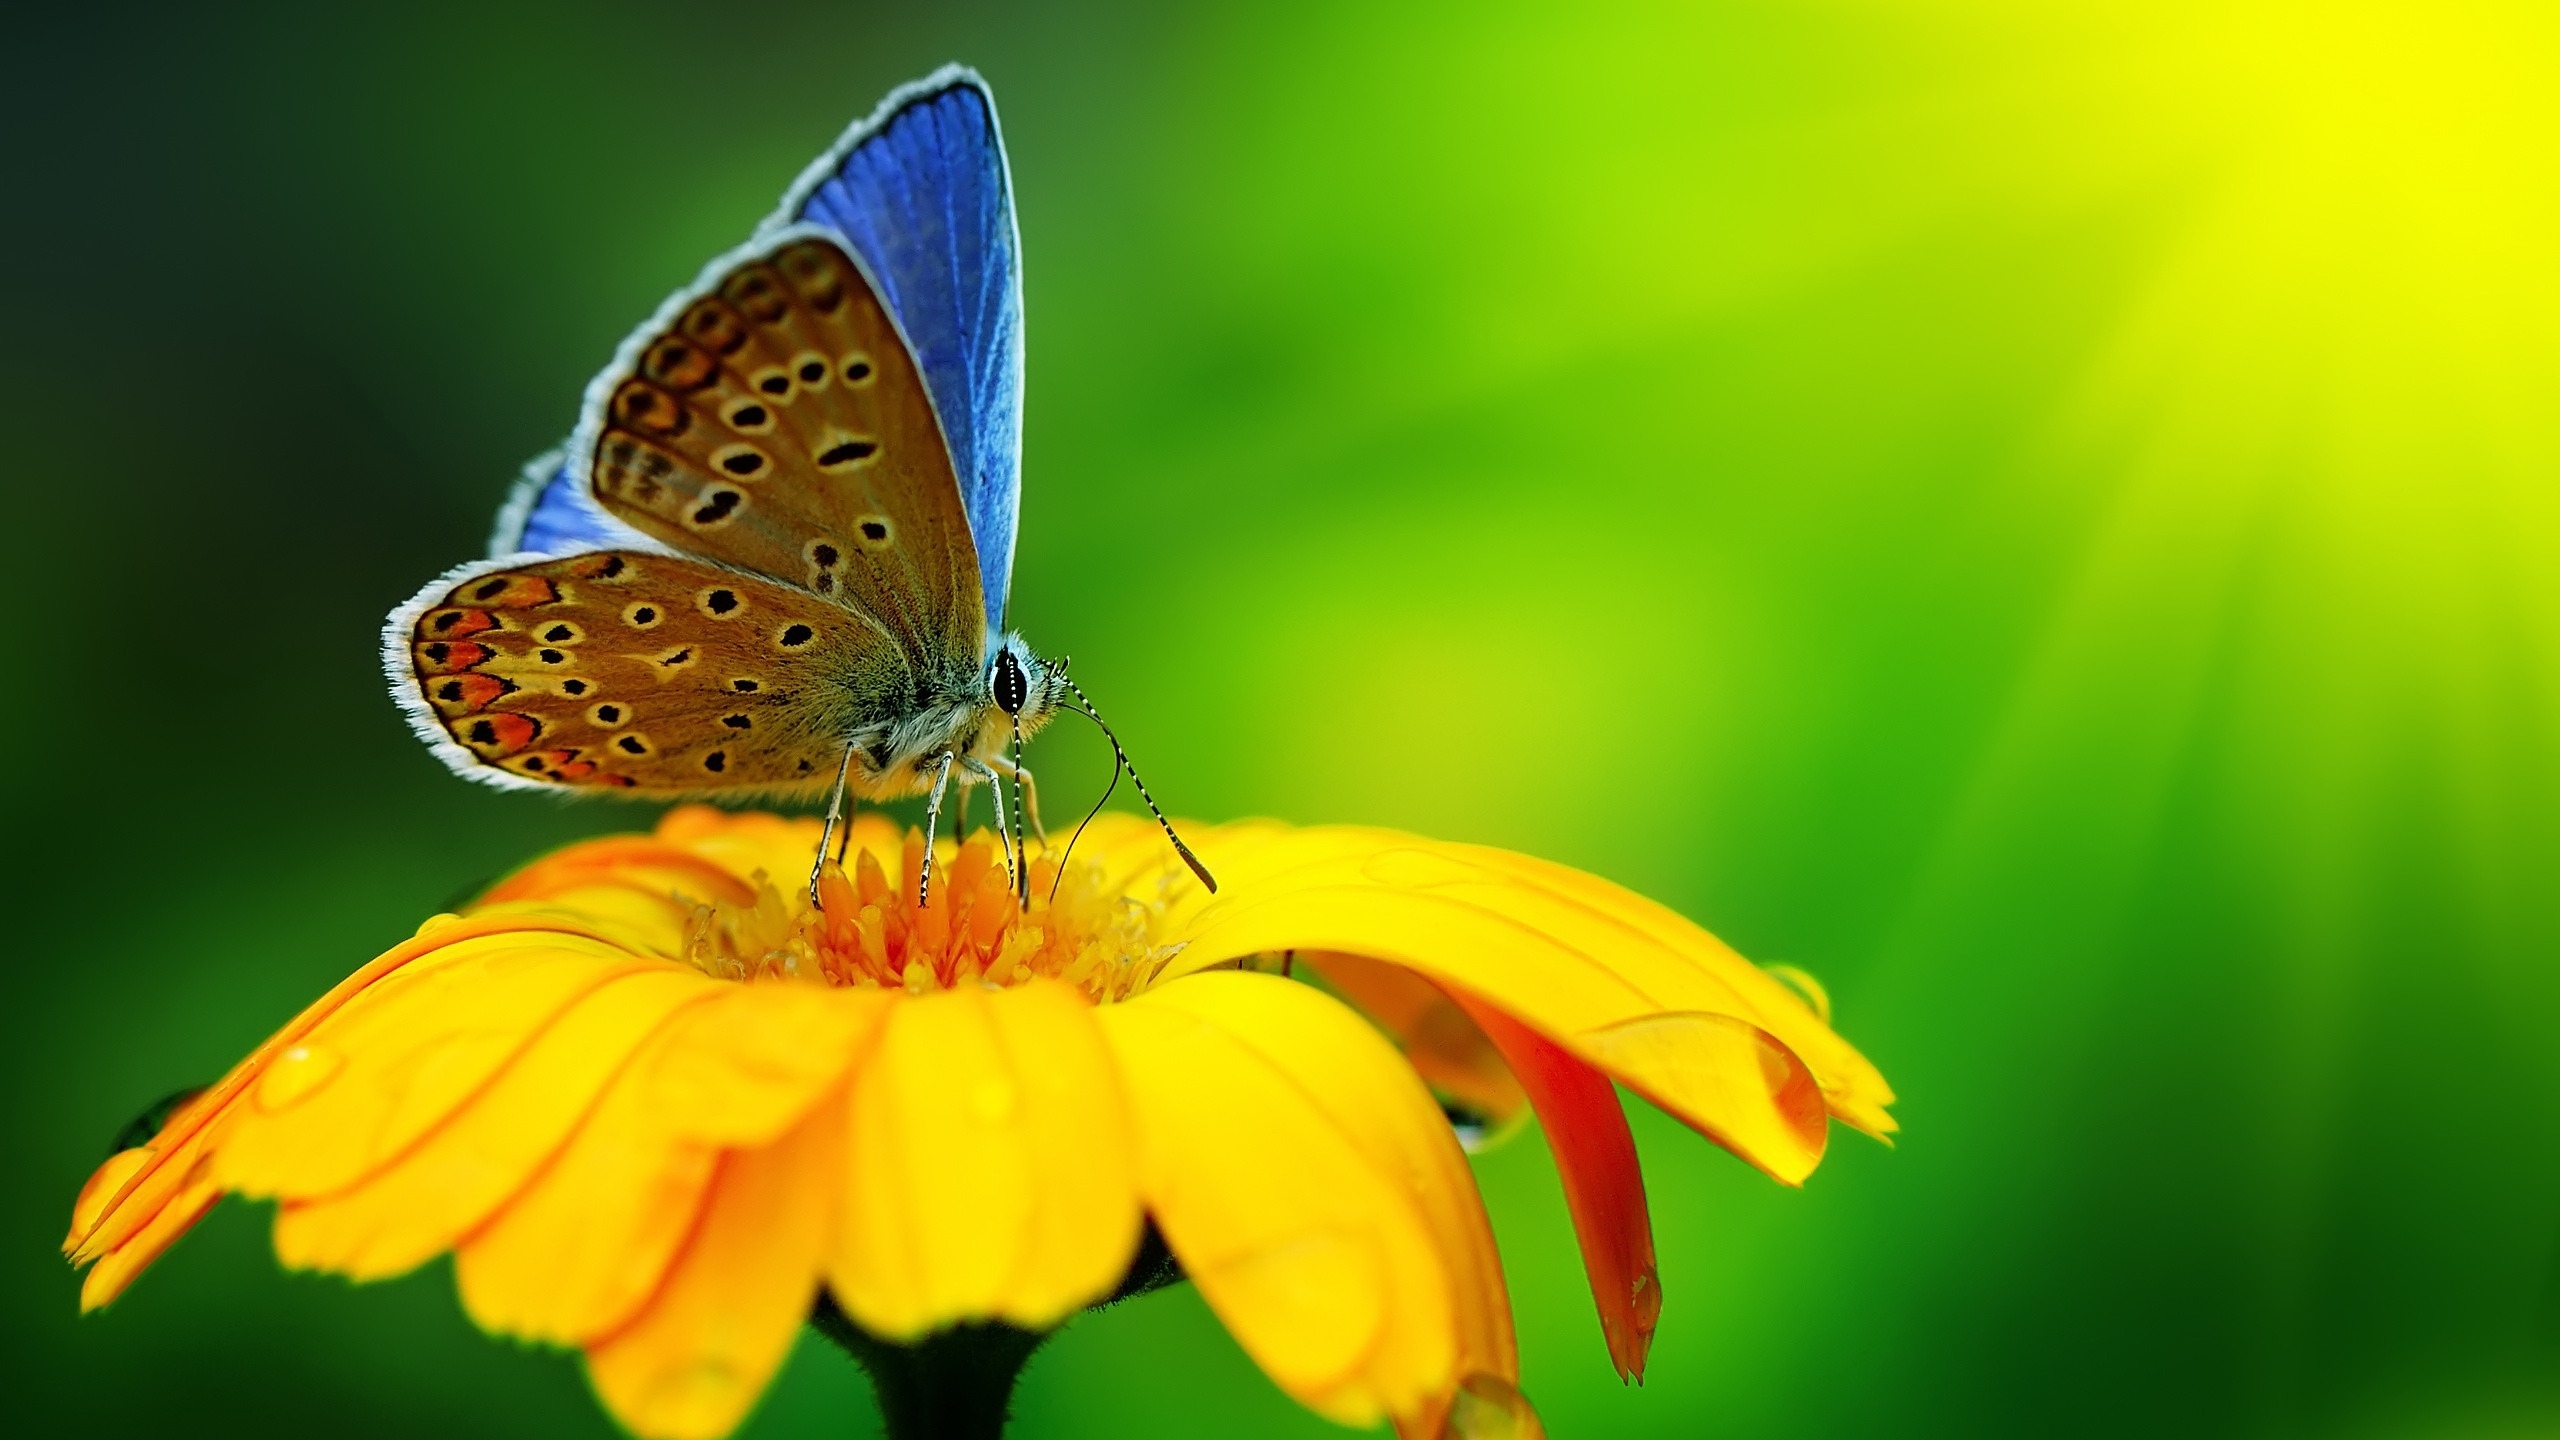 Butterfly Pollen for 2560x1440 HDTV resolution